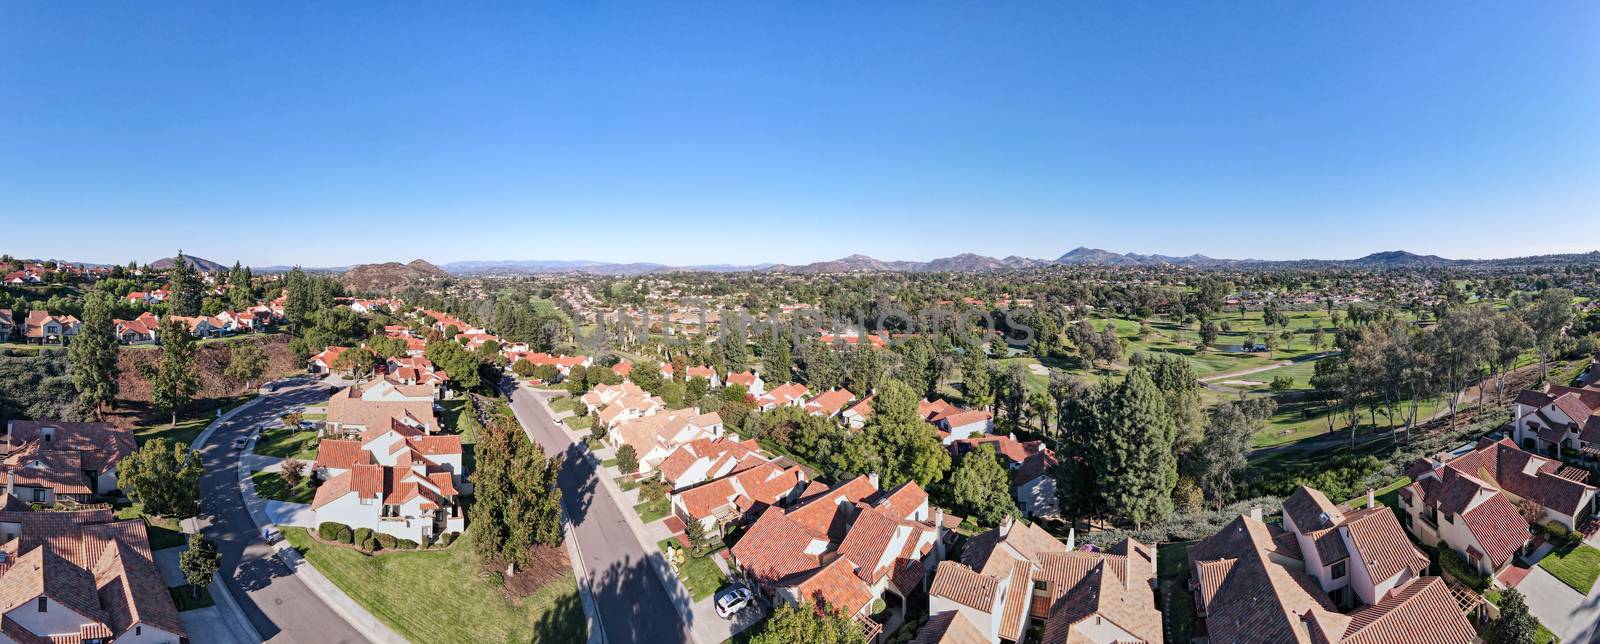 Aerial view of middle class neighborhood in Rancho Bernardo during autumn season by Bonandbon